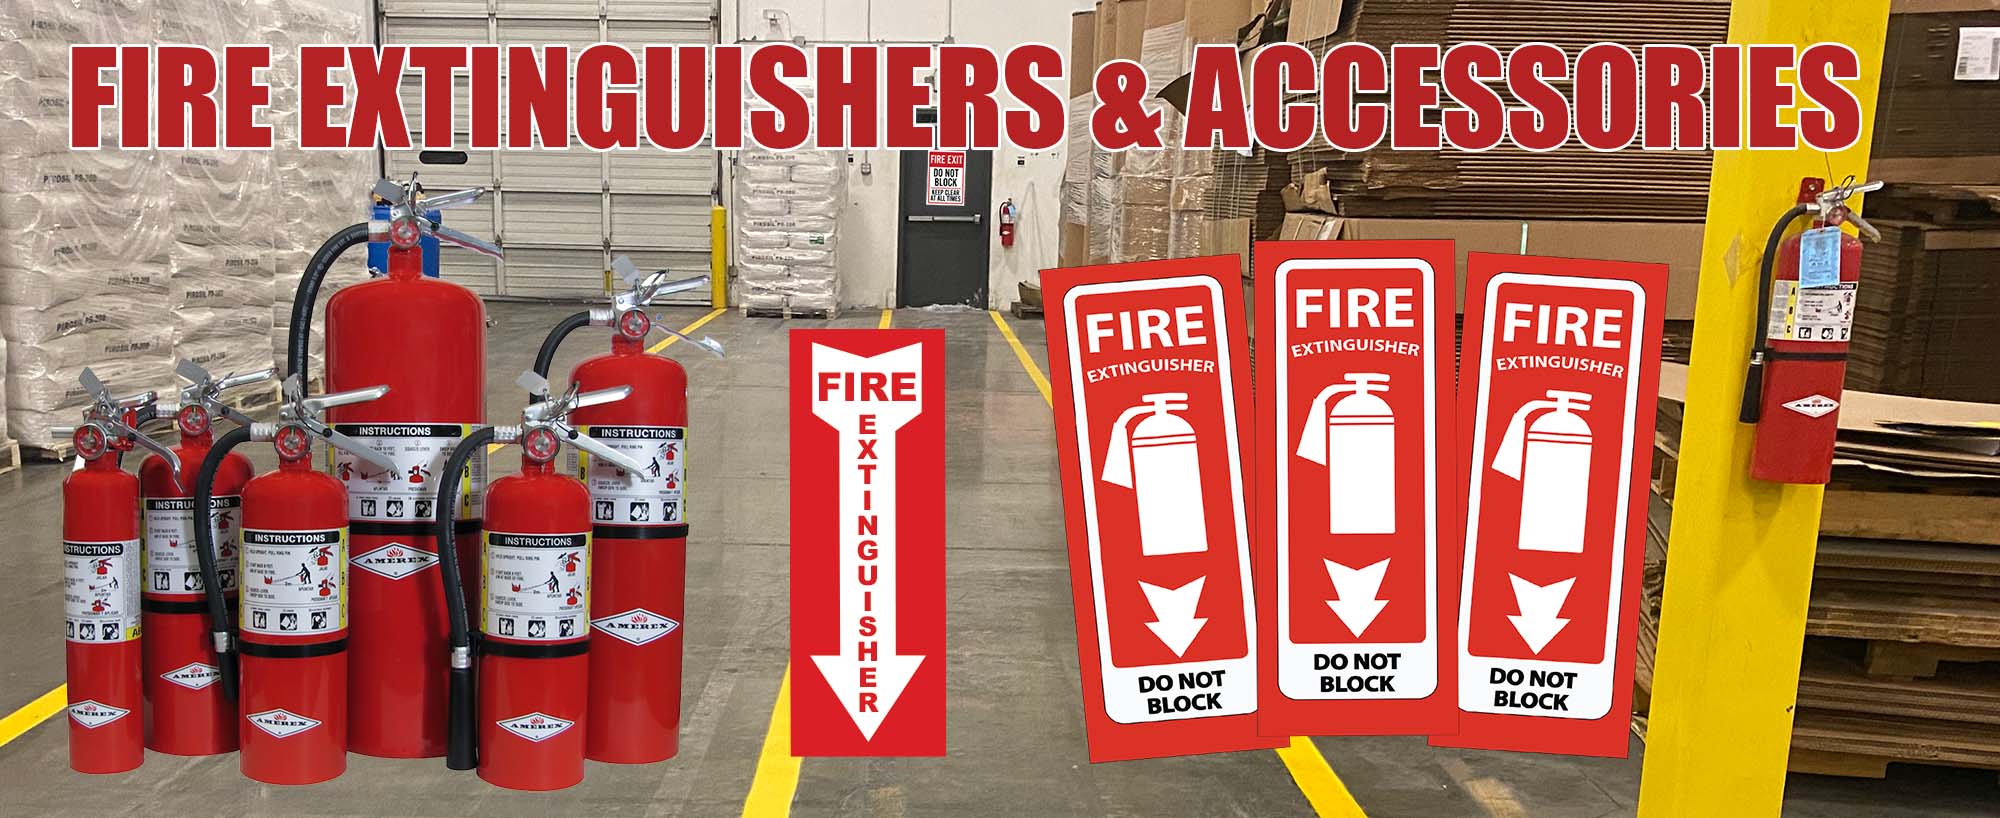 FIRE EXTINGUISHERS & ACCESSORIES